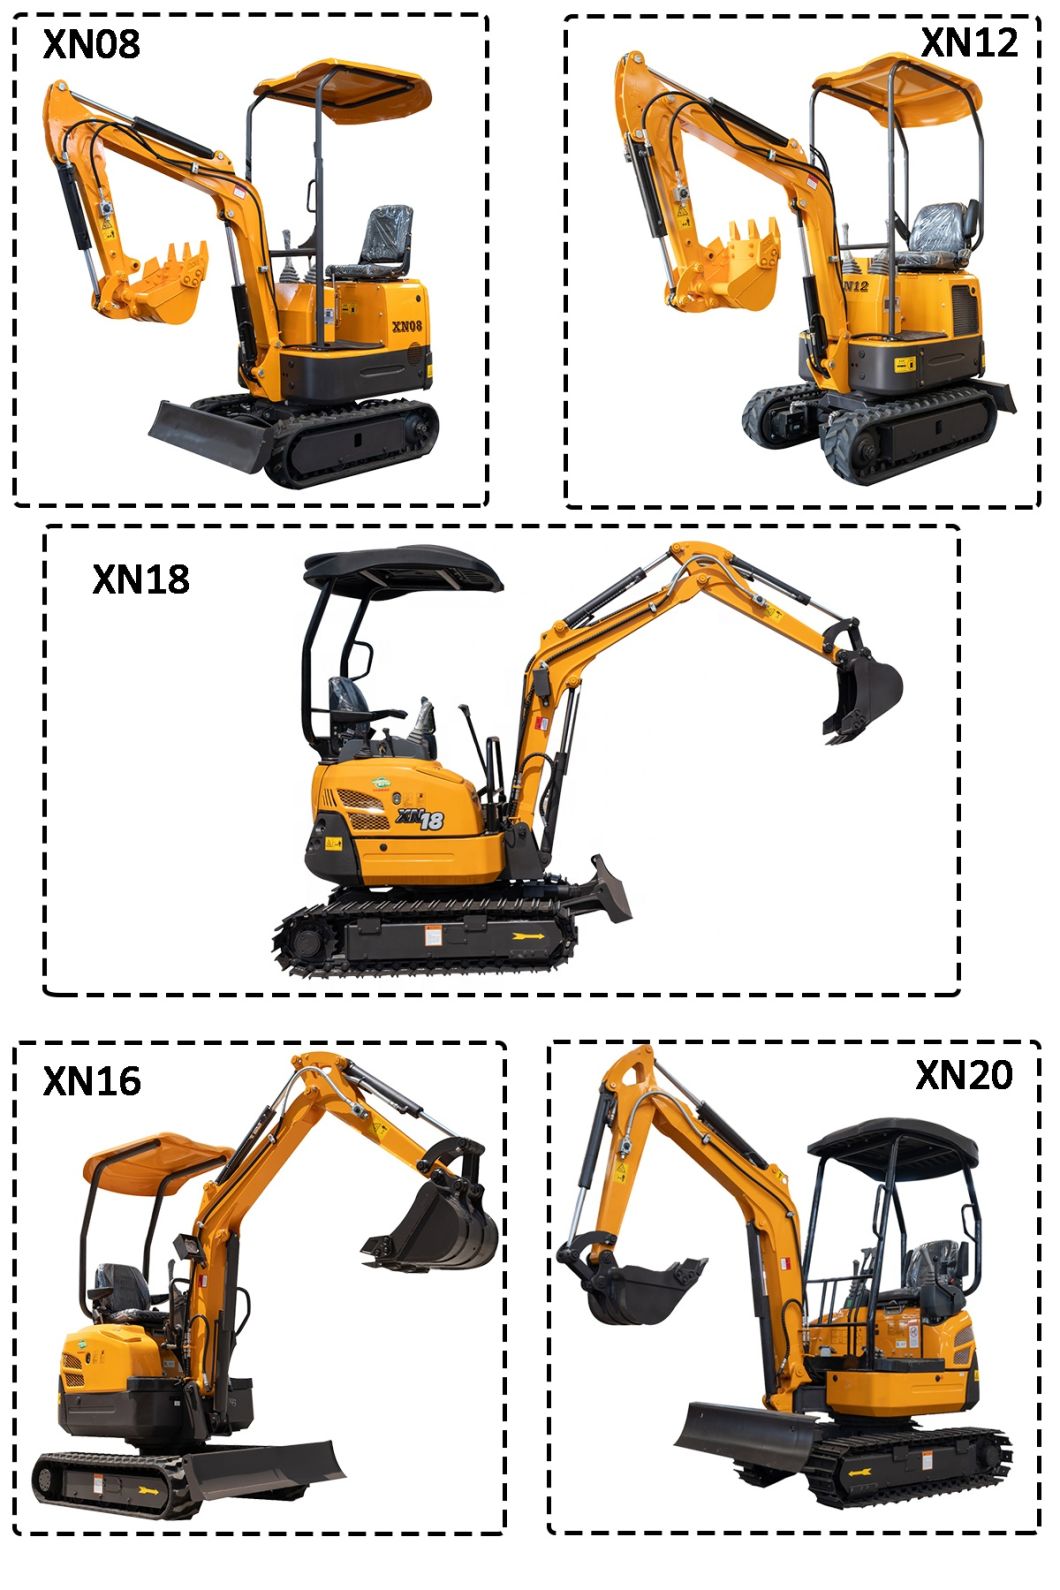 New Mini Excavator 0.8t Xn08, Mini Crawler Excavator for Sale